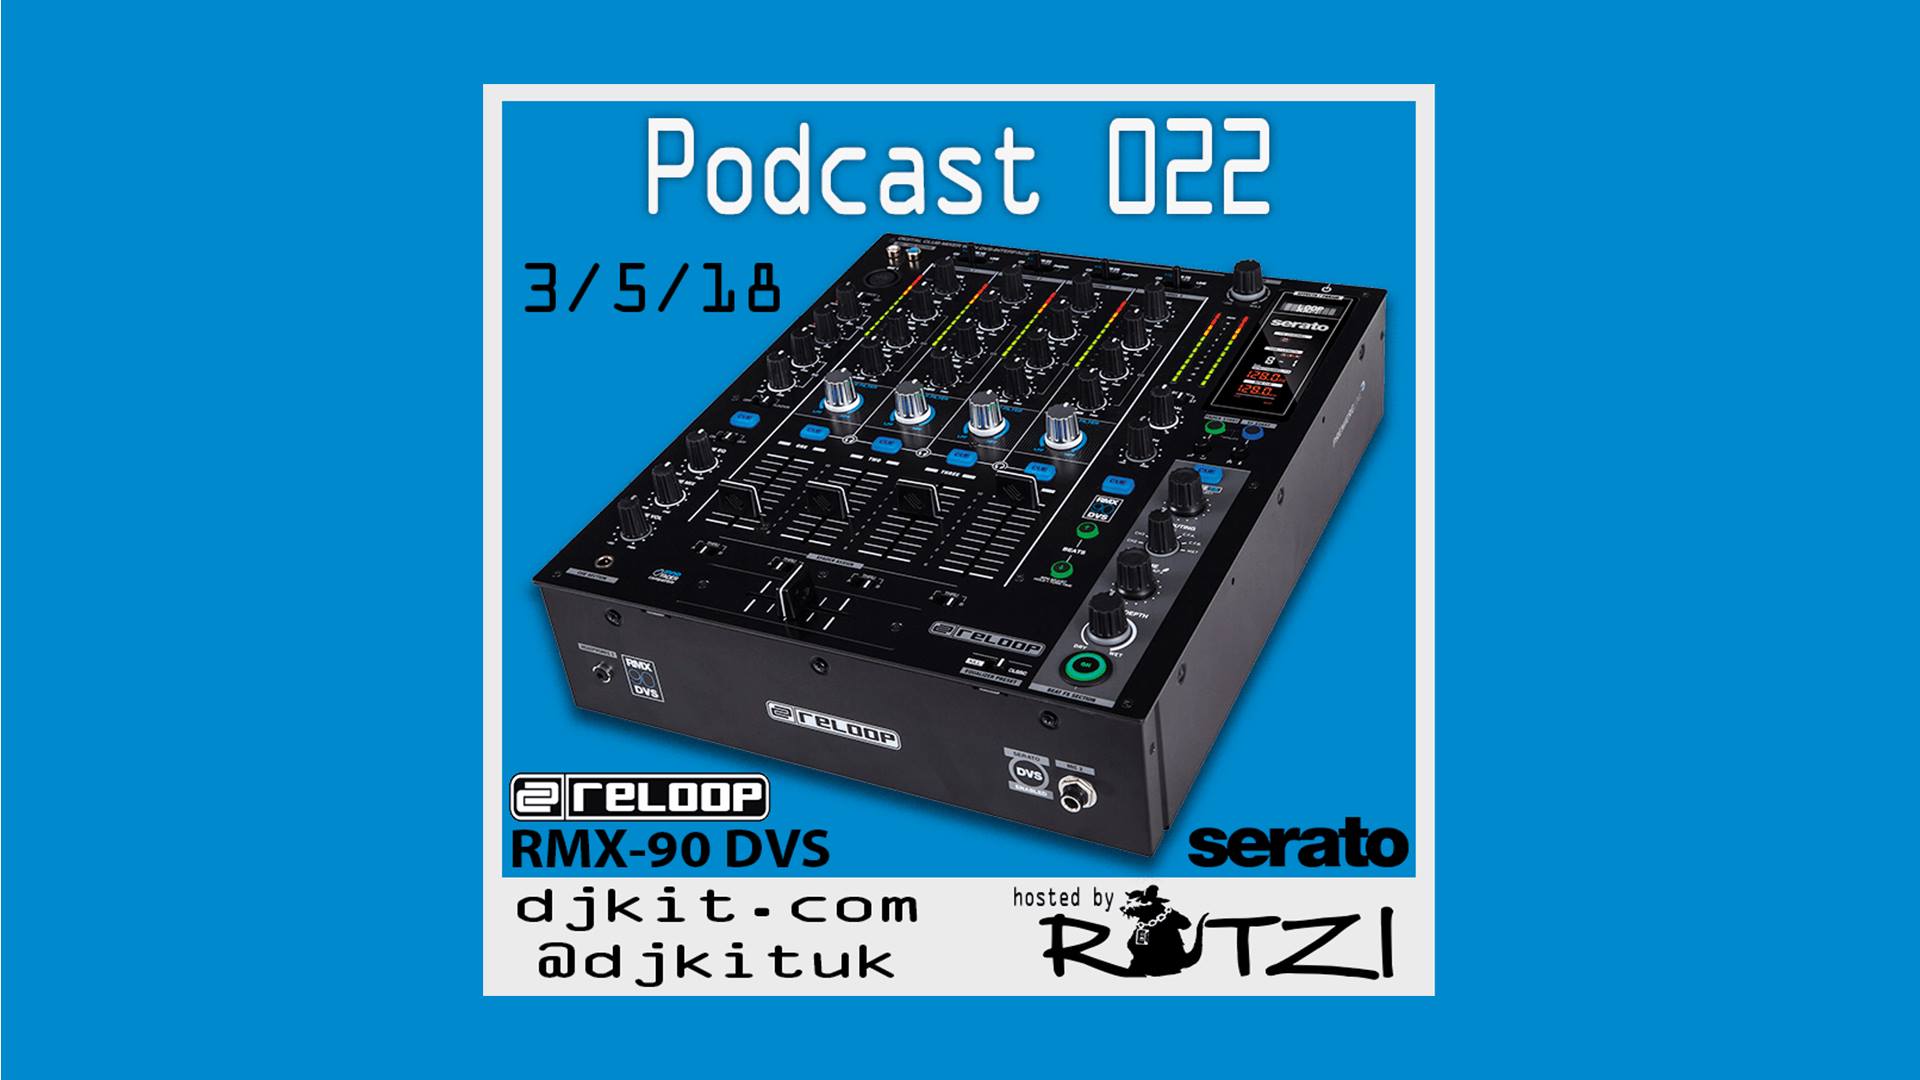 DJKit Podcast 022 - Reloop Rmx-90 DVS